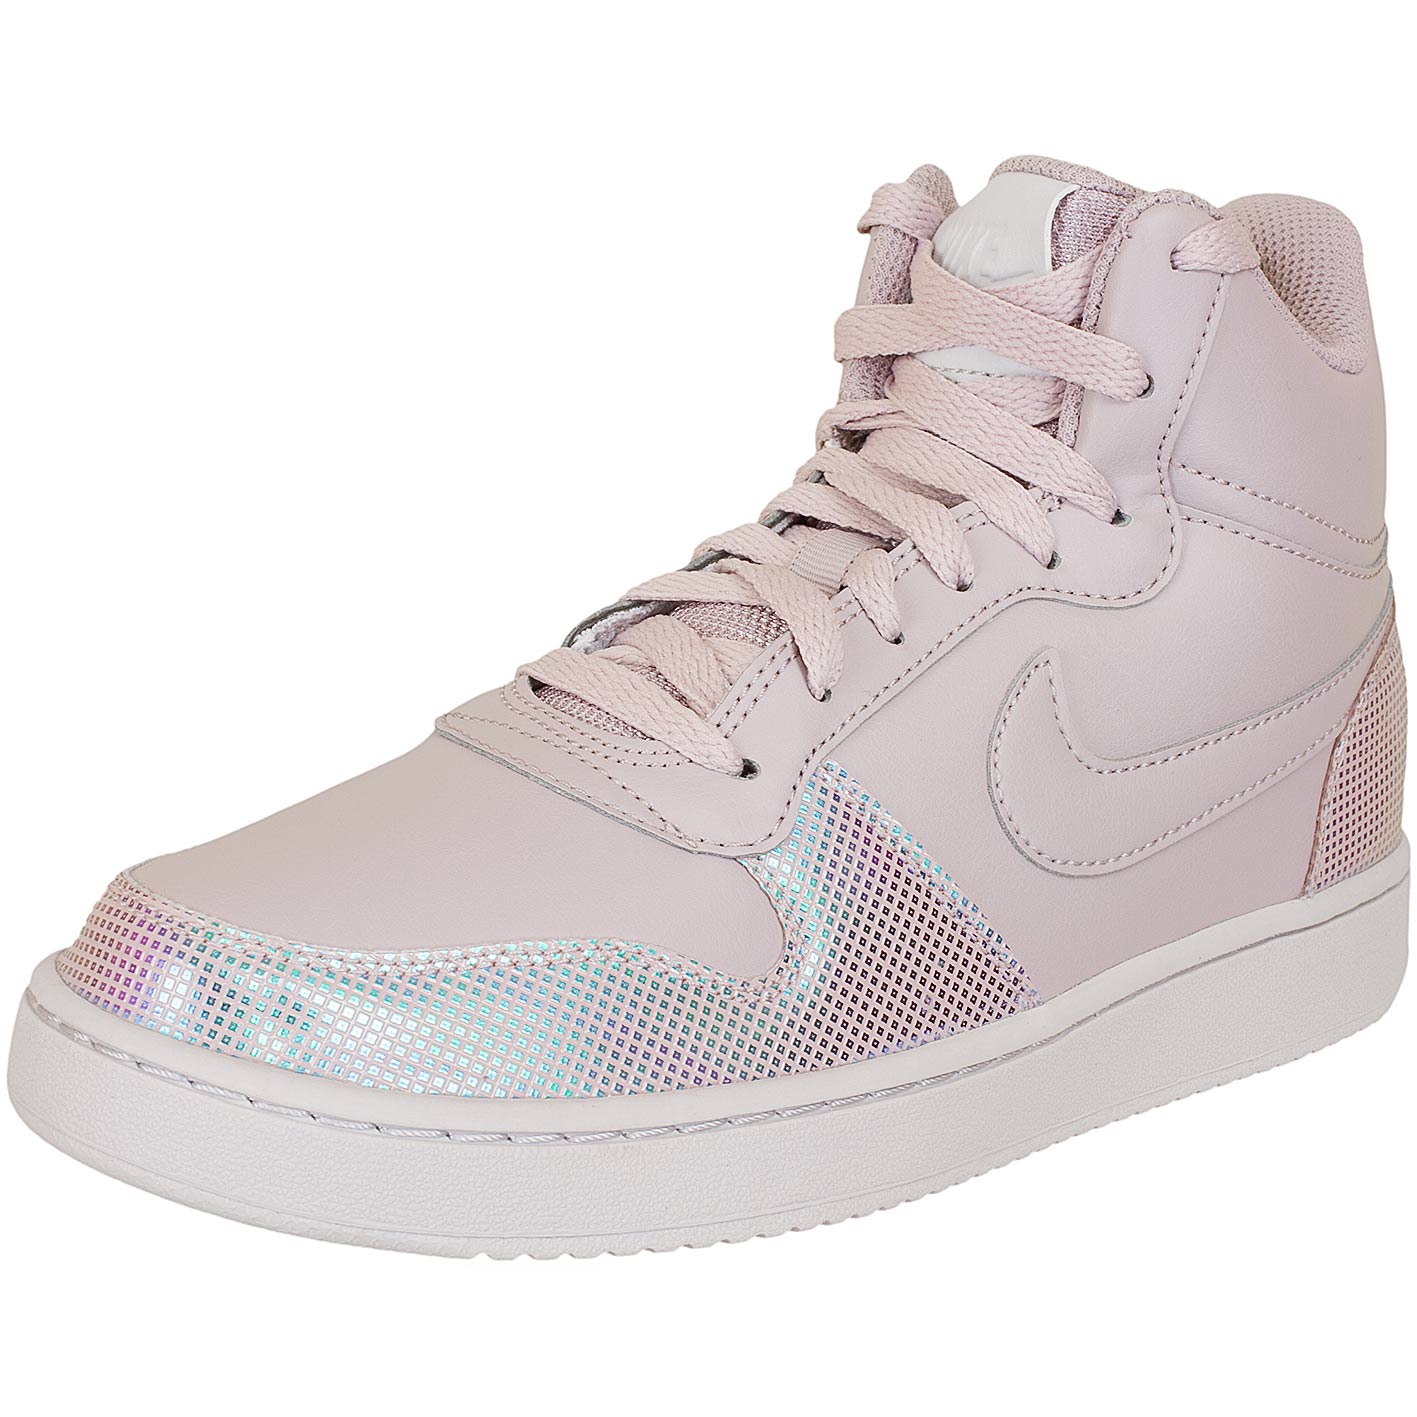 ☆ Nike Damen Sneaker Court Borough Mid SE rosa/grau - hier bestellen!